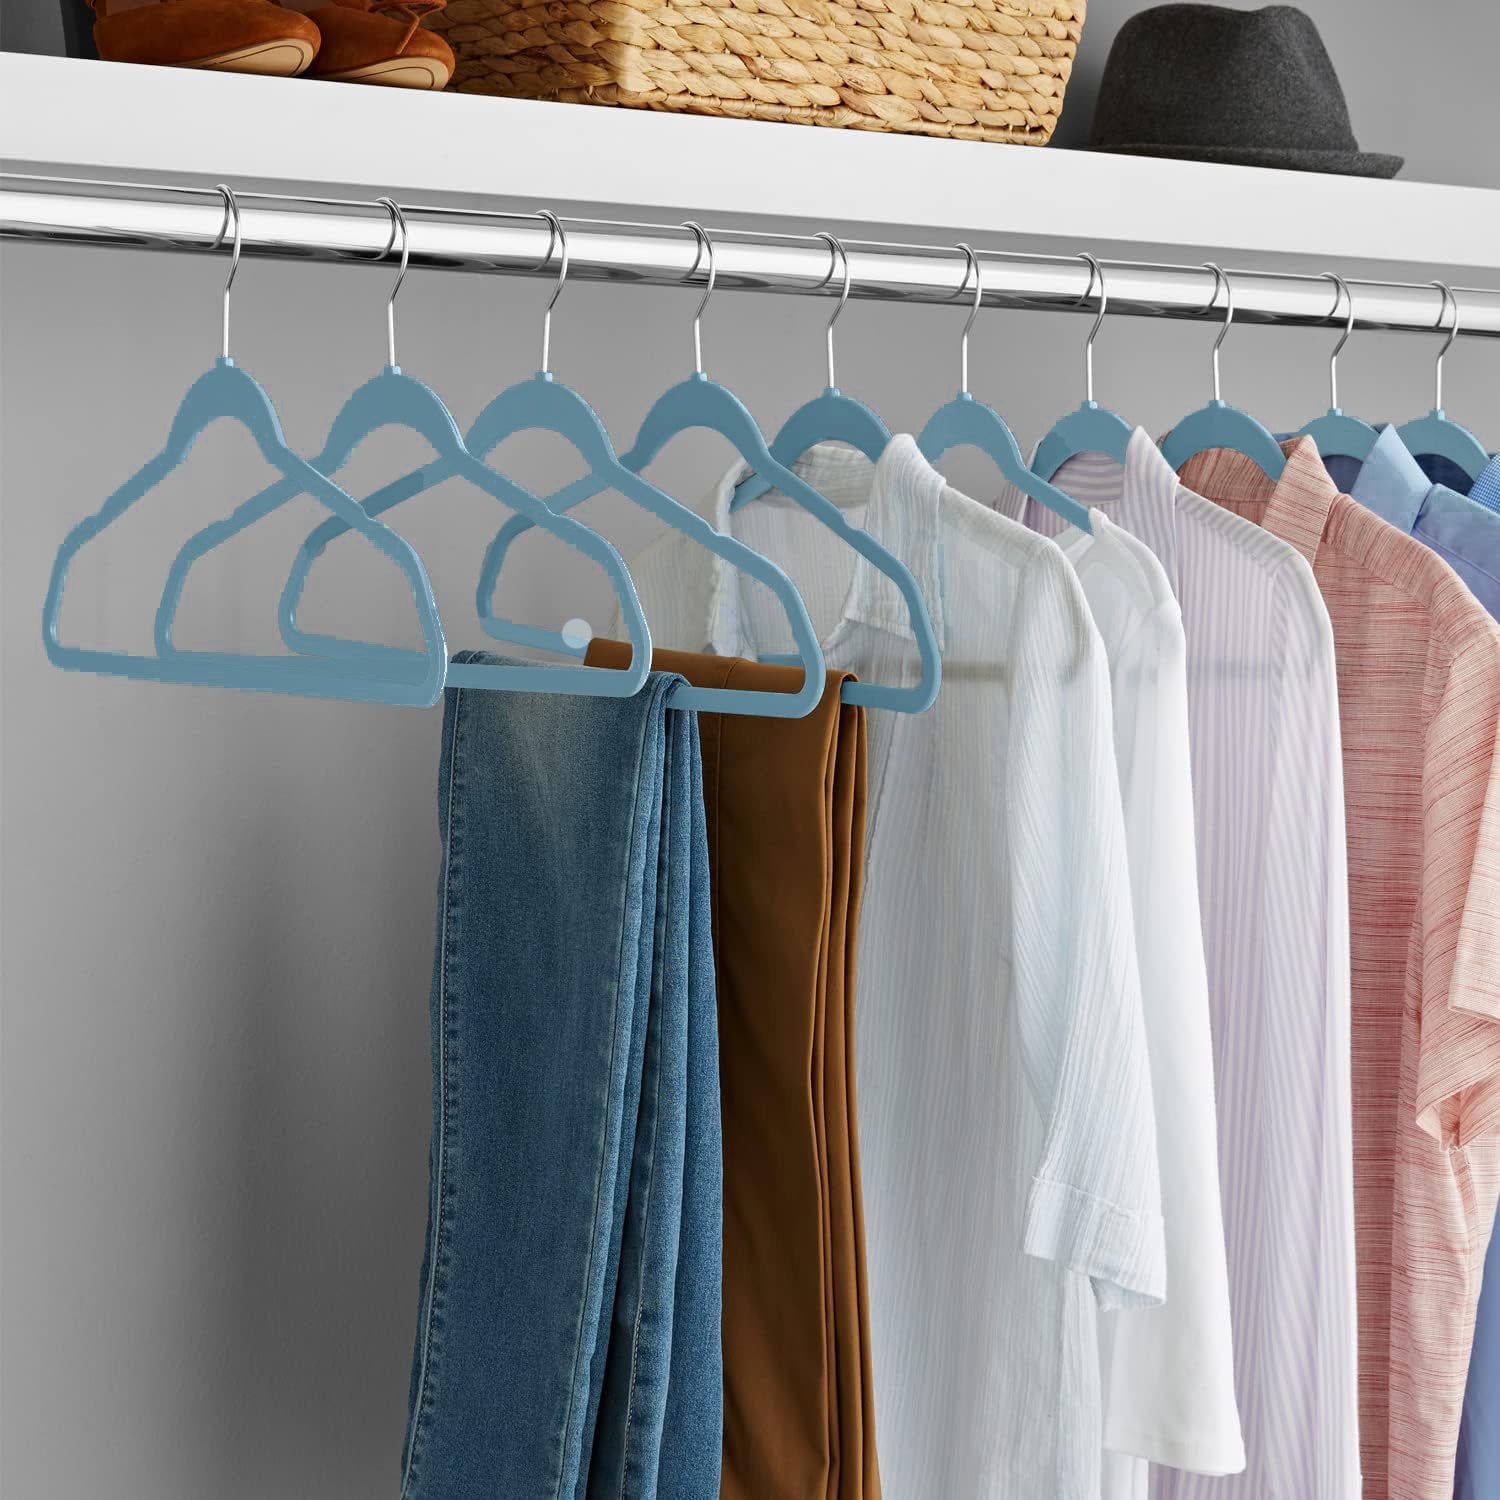 50pk Waverly Teal Velvet Hangers Non-Slip – Slim Profile, Maximize Closets